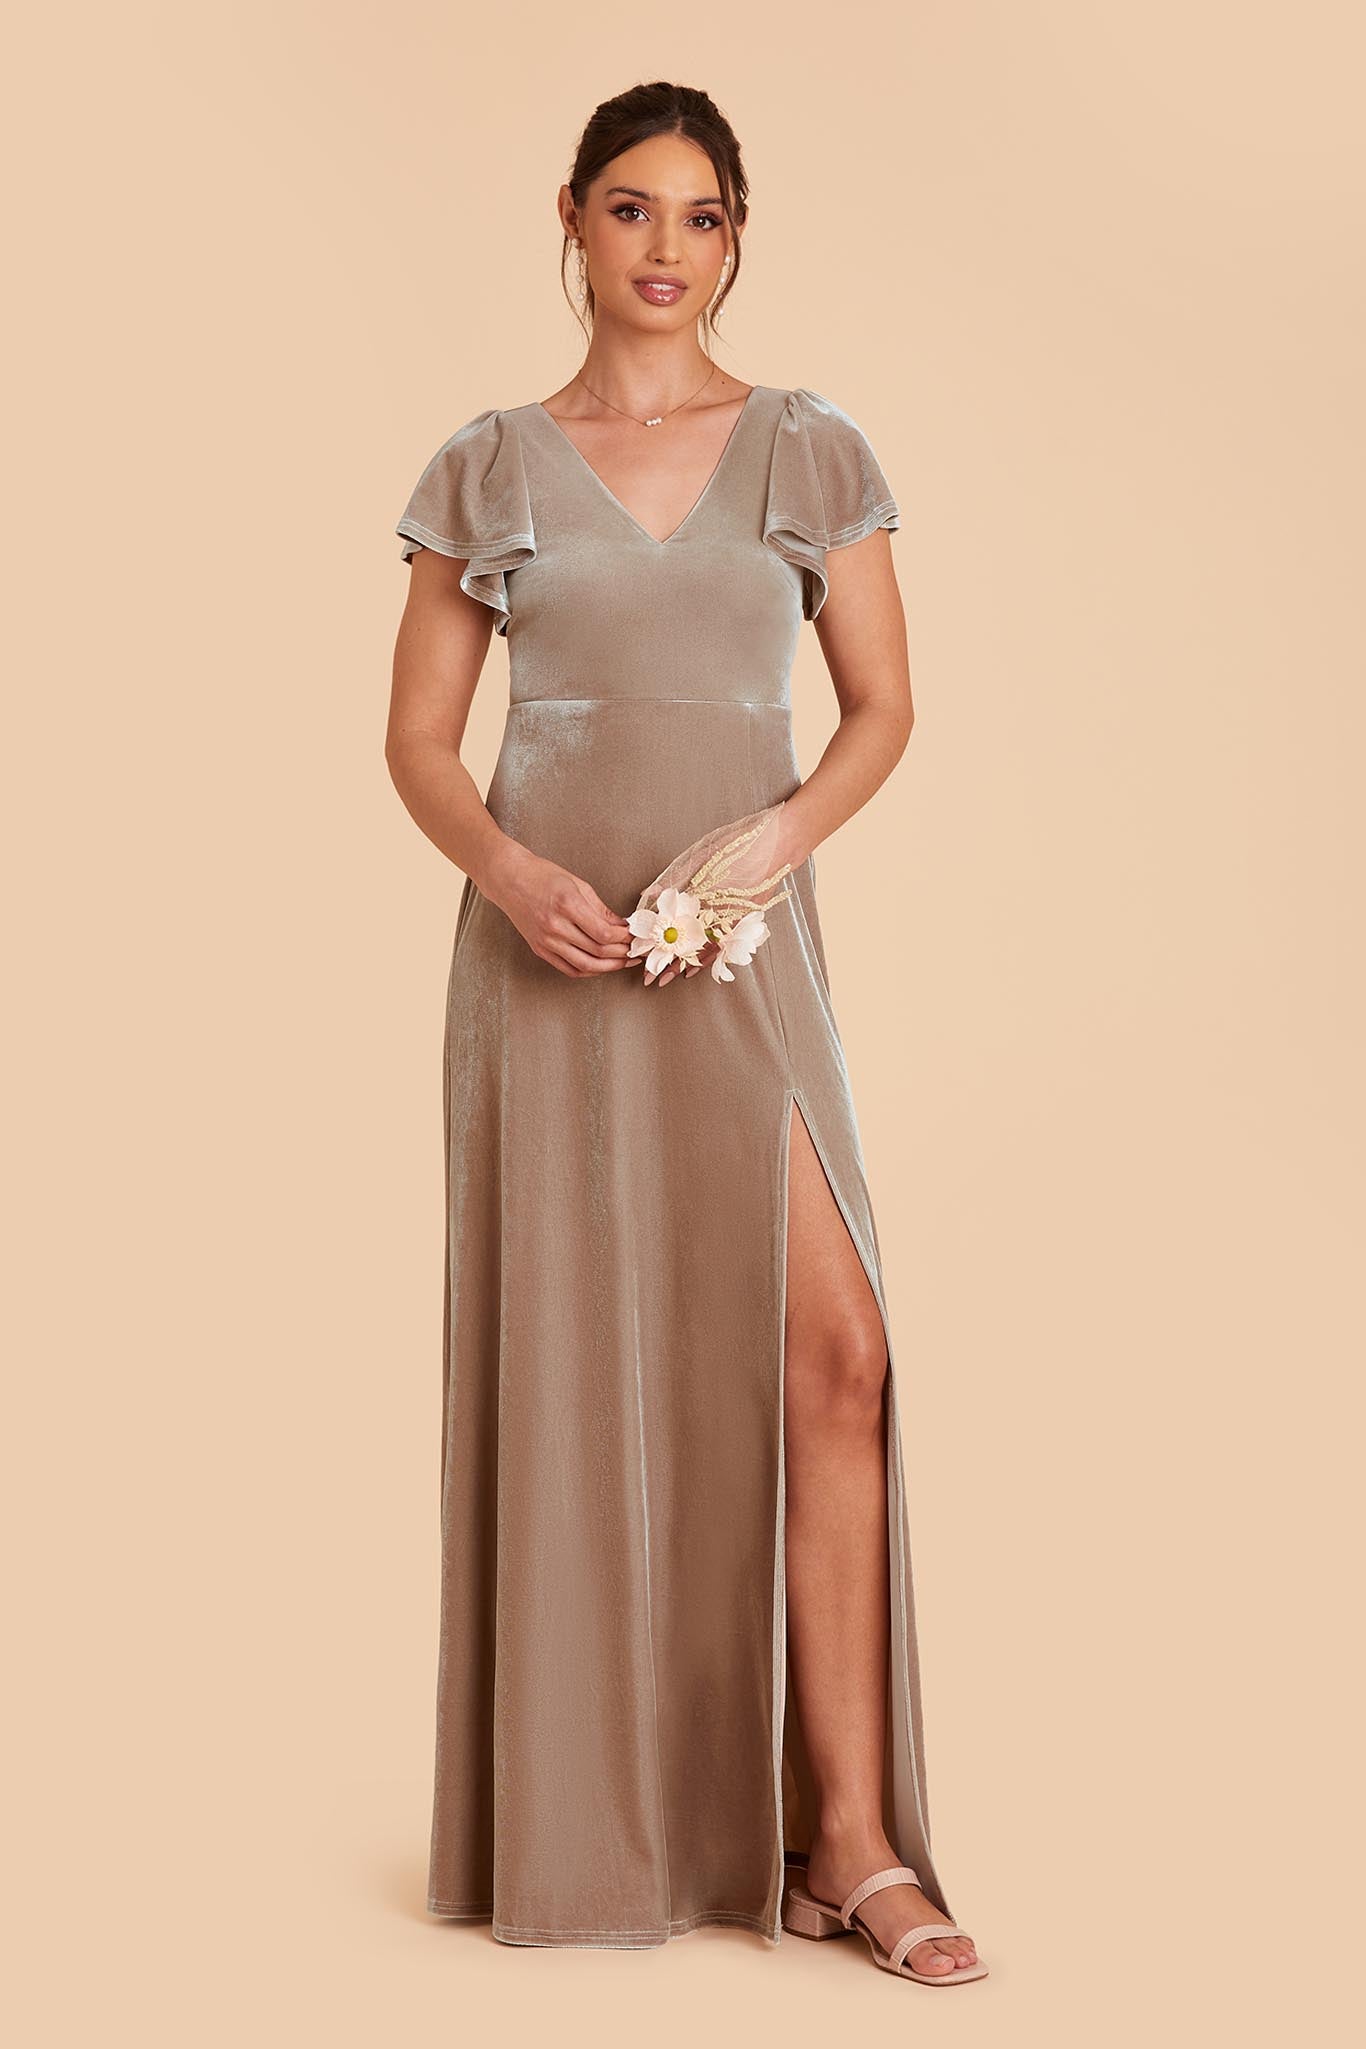 Taupe Hannah Velvet Dress by Birdy Grey